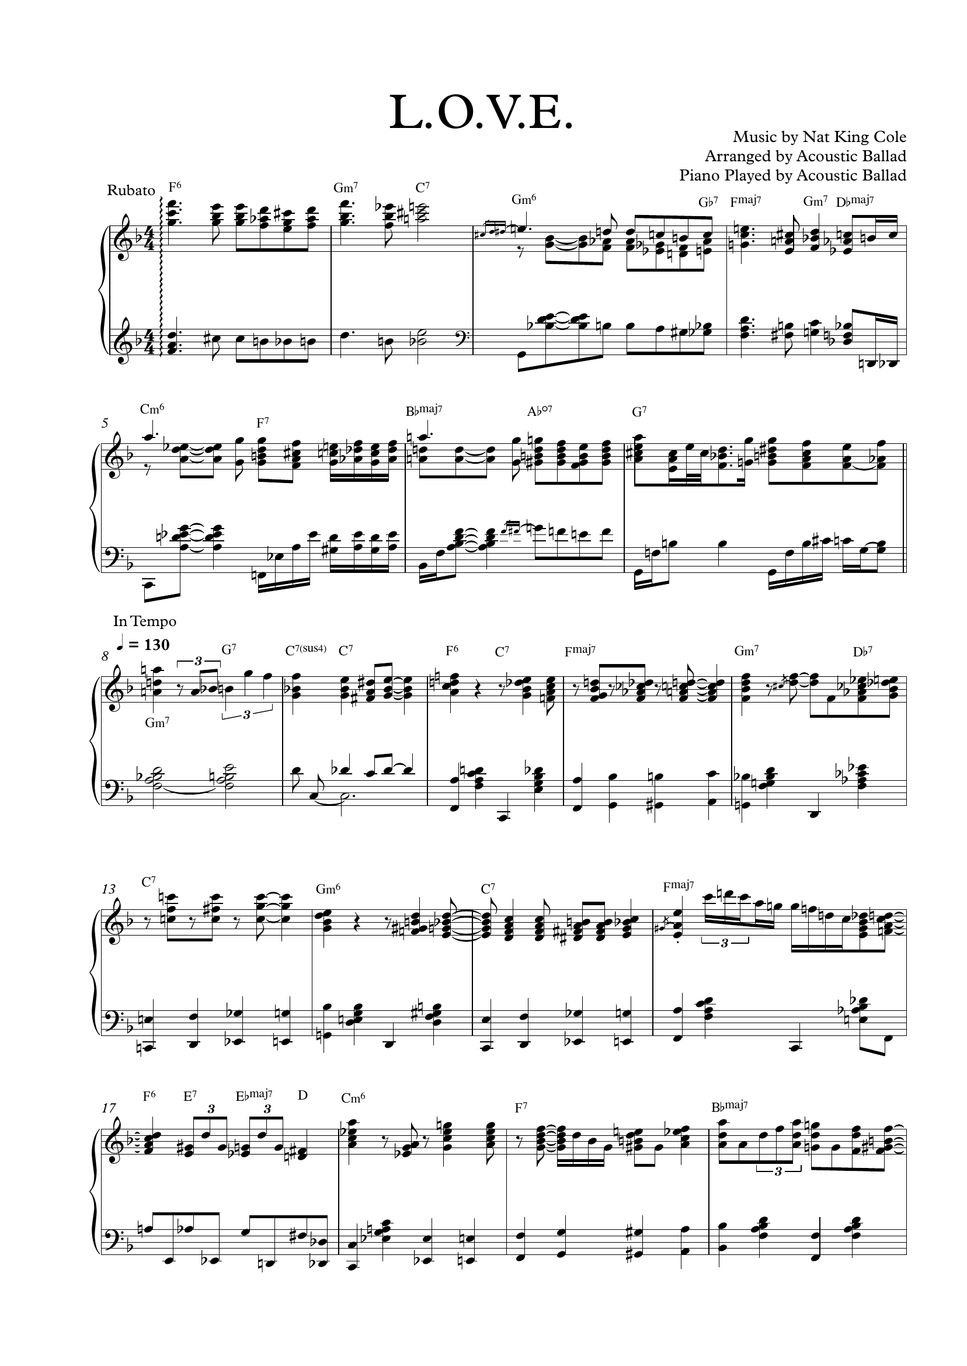 Nat King Cole - L.O.V.E. (Solo Piano Ver.) Sheets by Acoustic Ballad